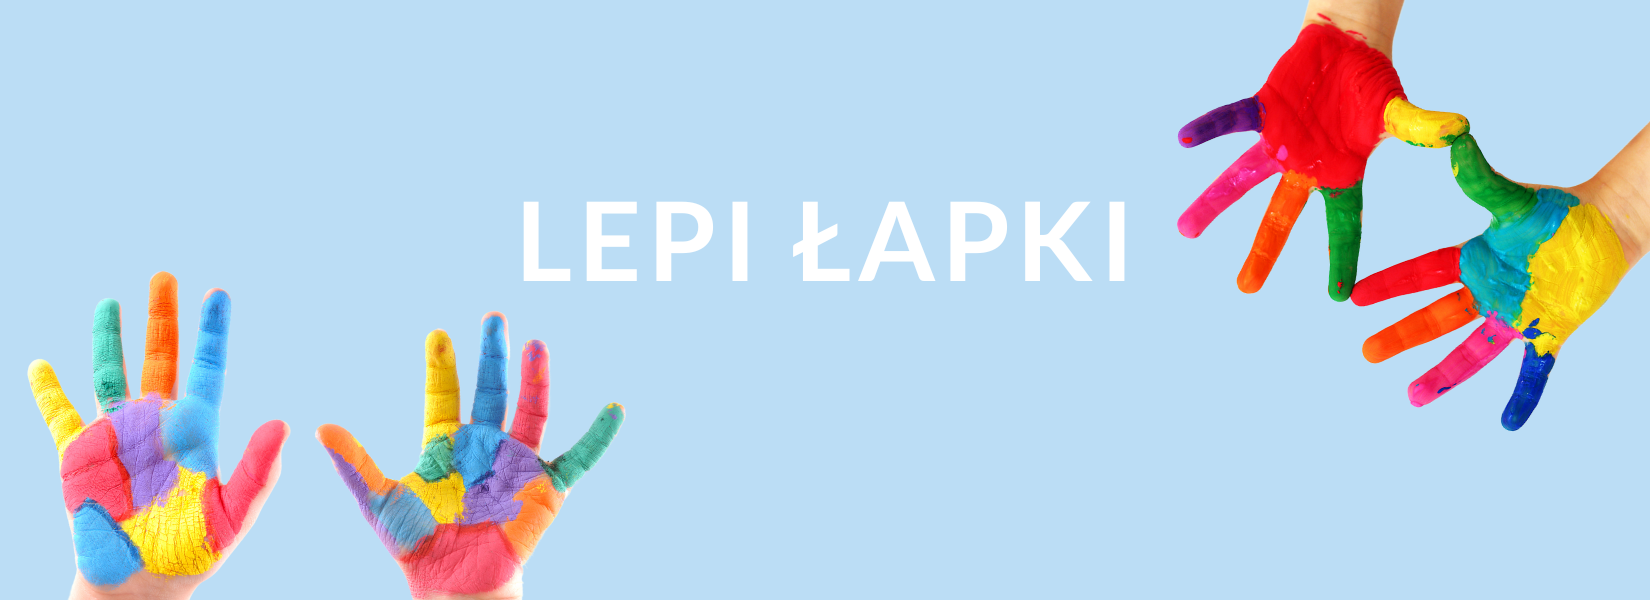 Lepi Łapki